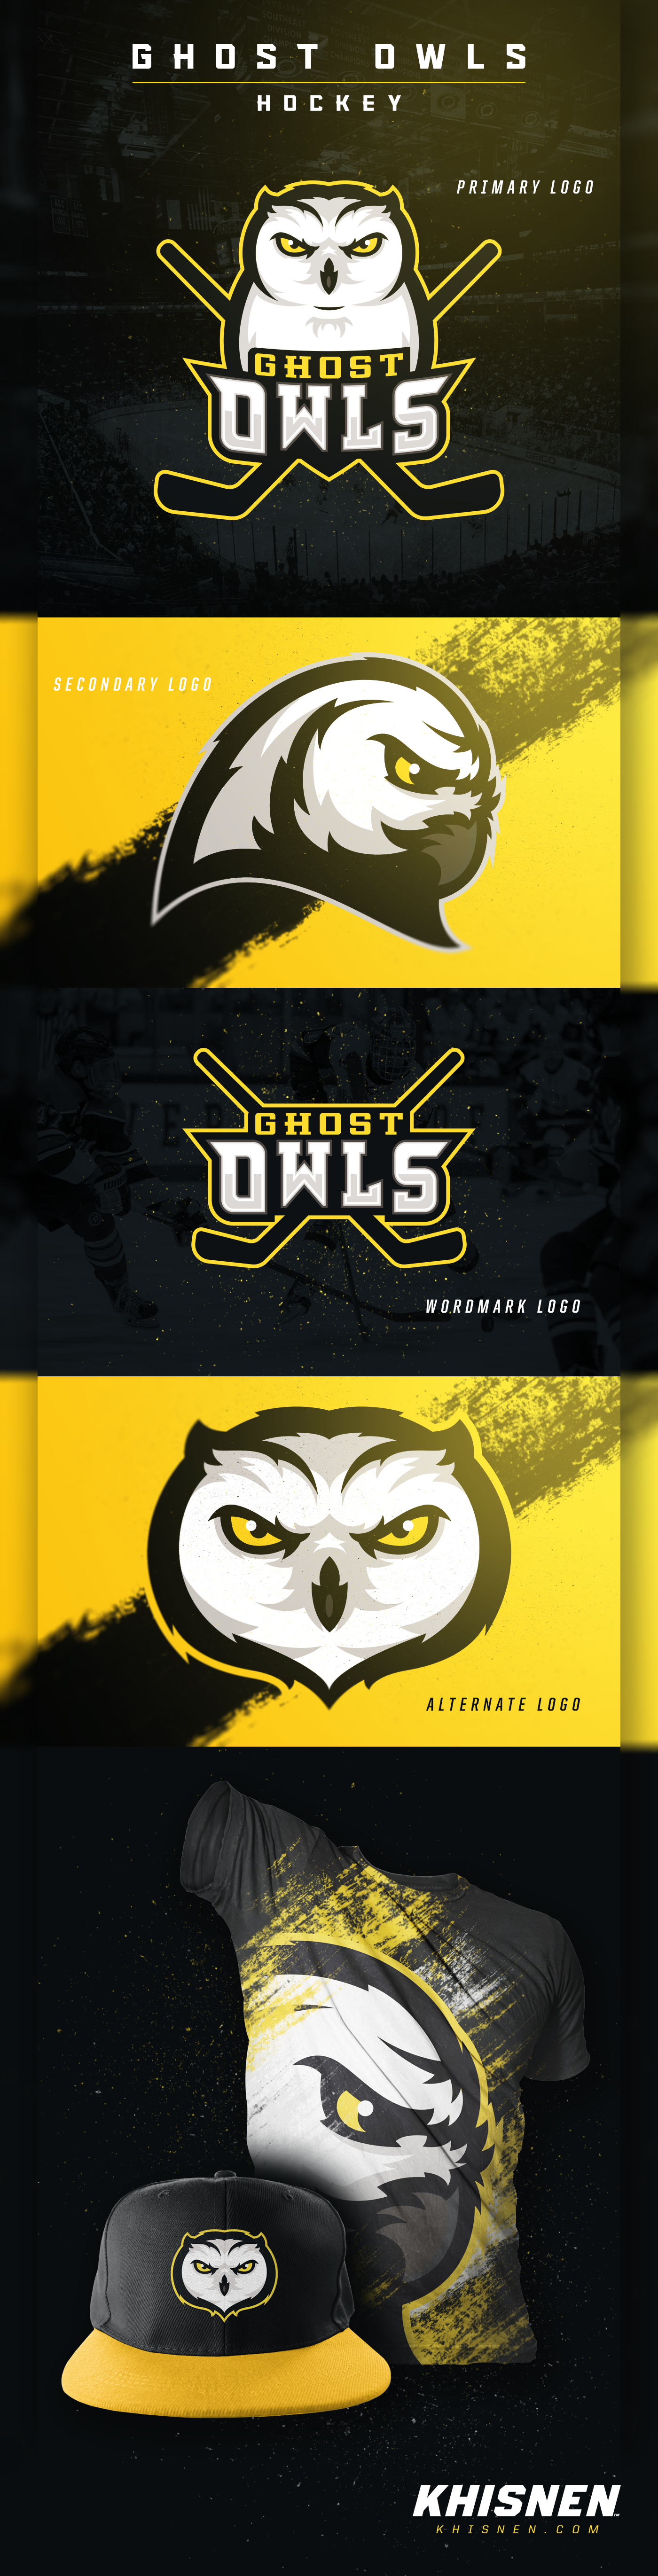 owls hockey sport ghost Snowy Owls capeaters Hats merchandise